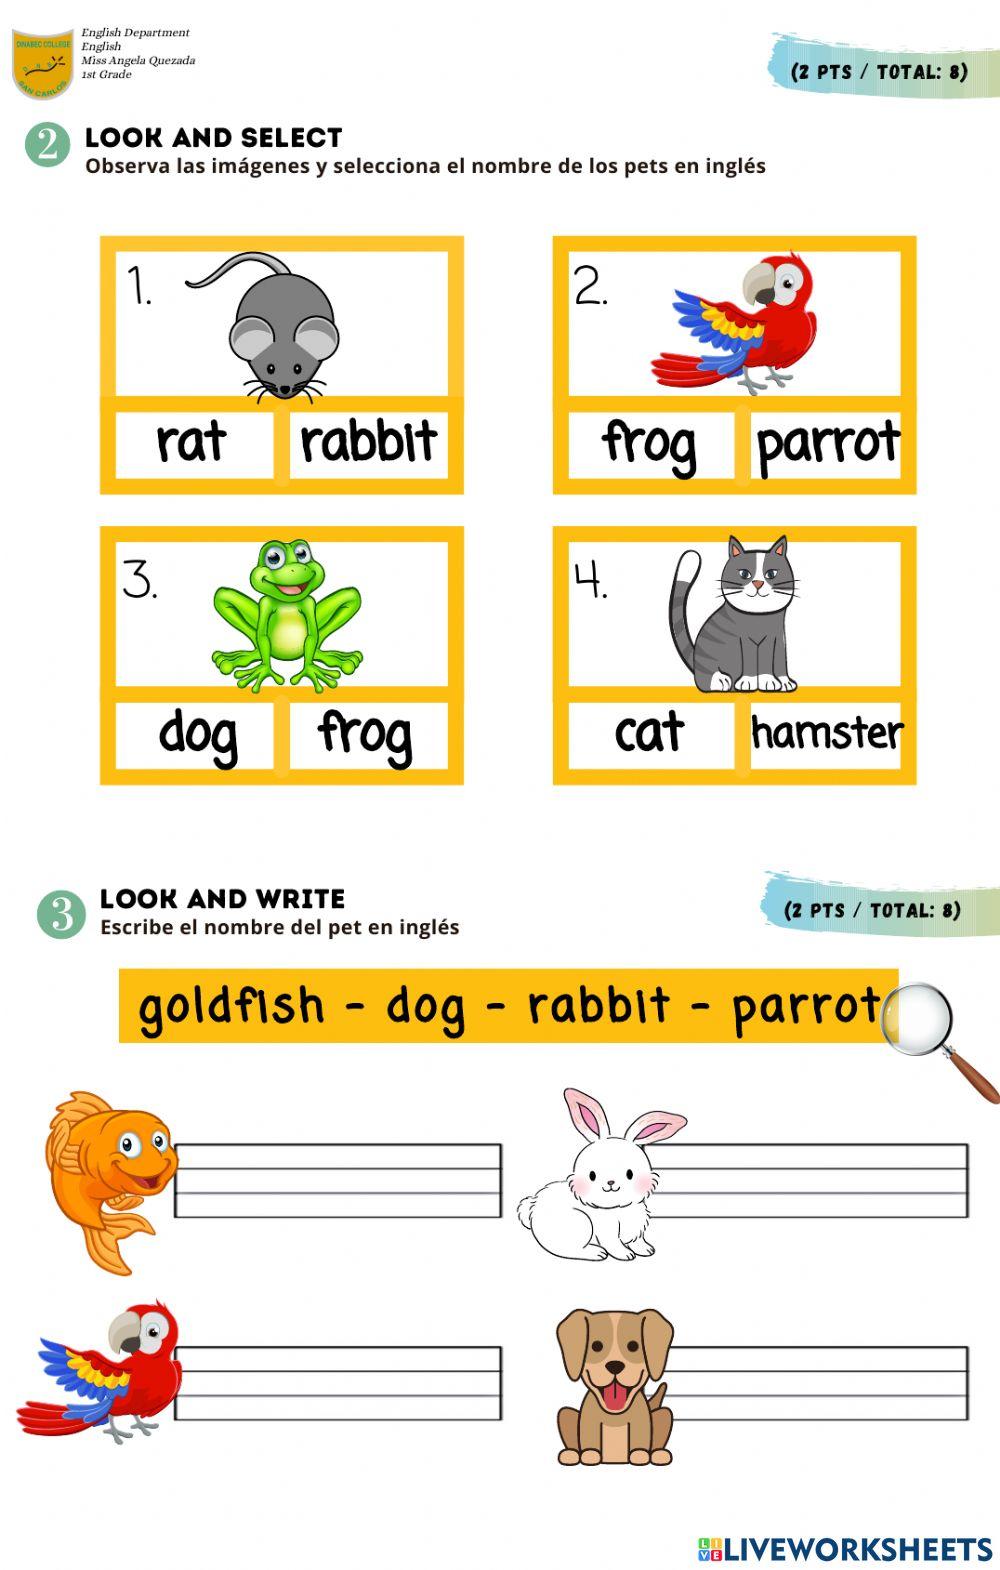 1st Grade - English Test -Pets-